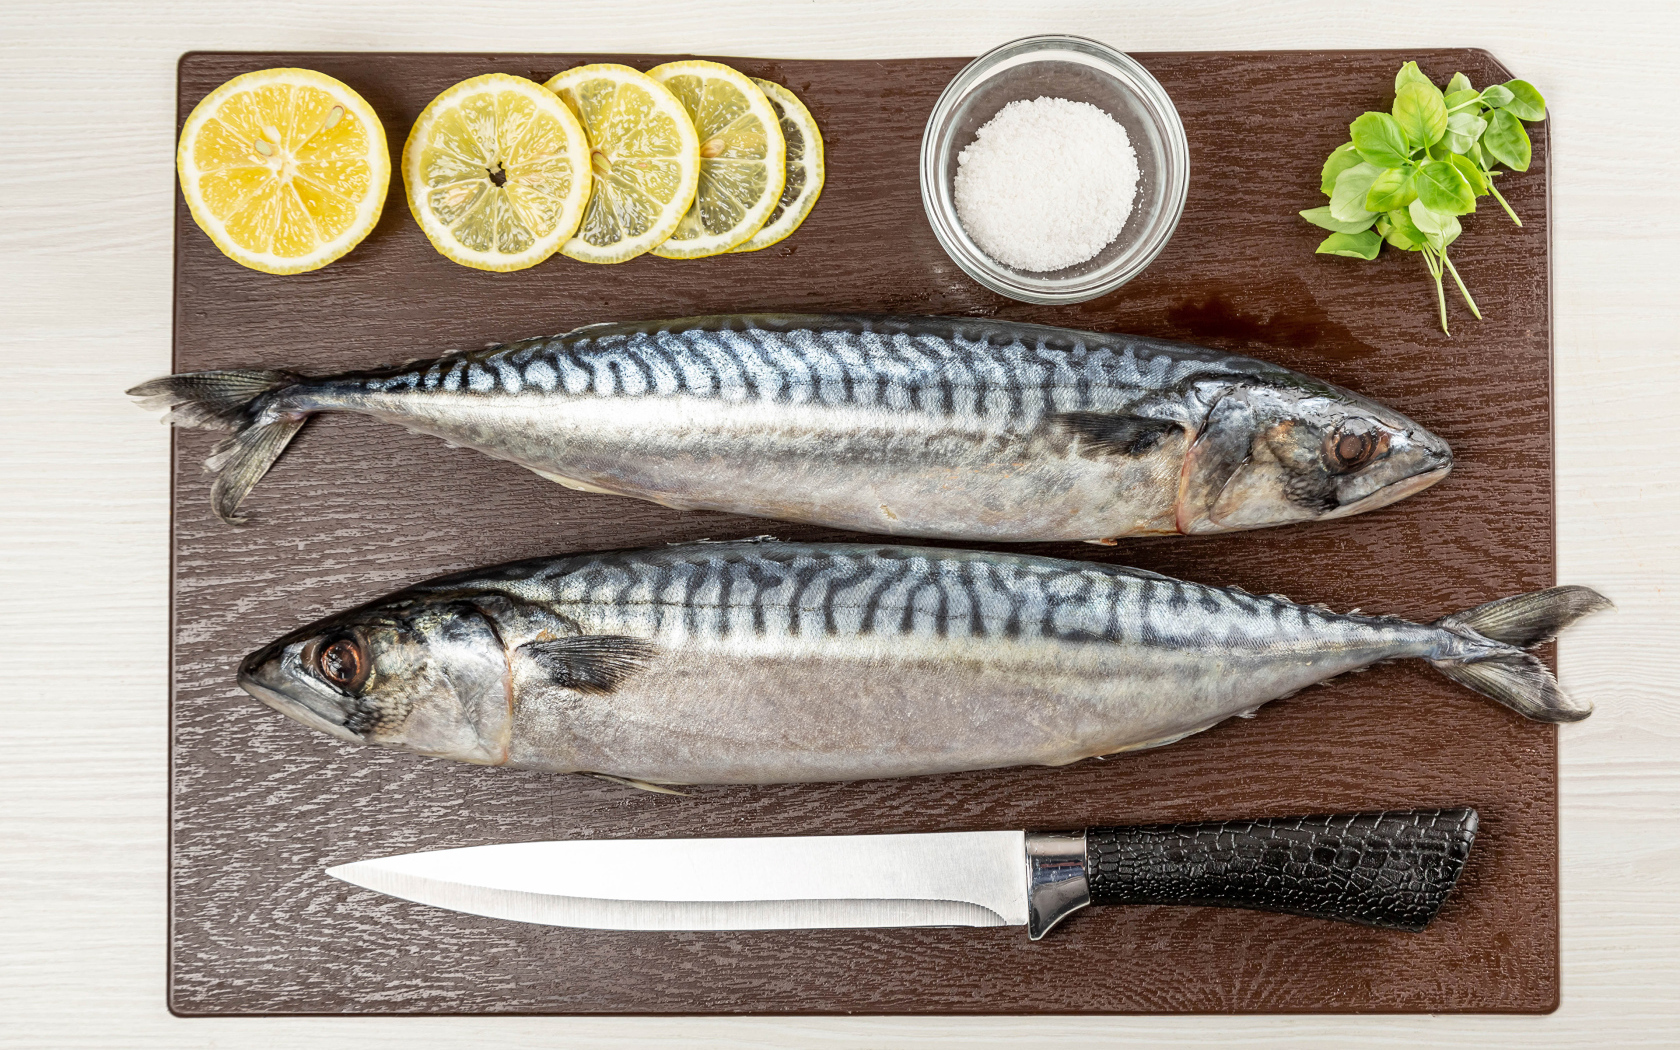 Two fresh mackerels on a board with lemon